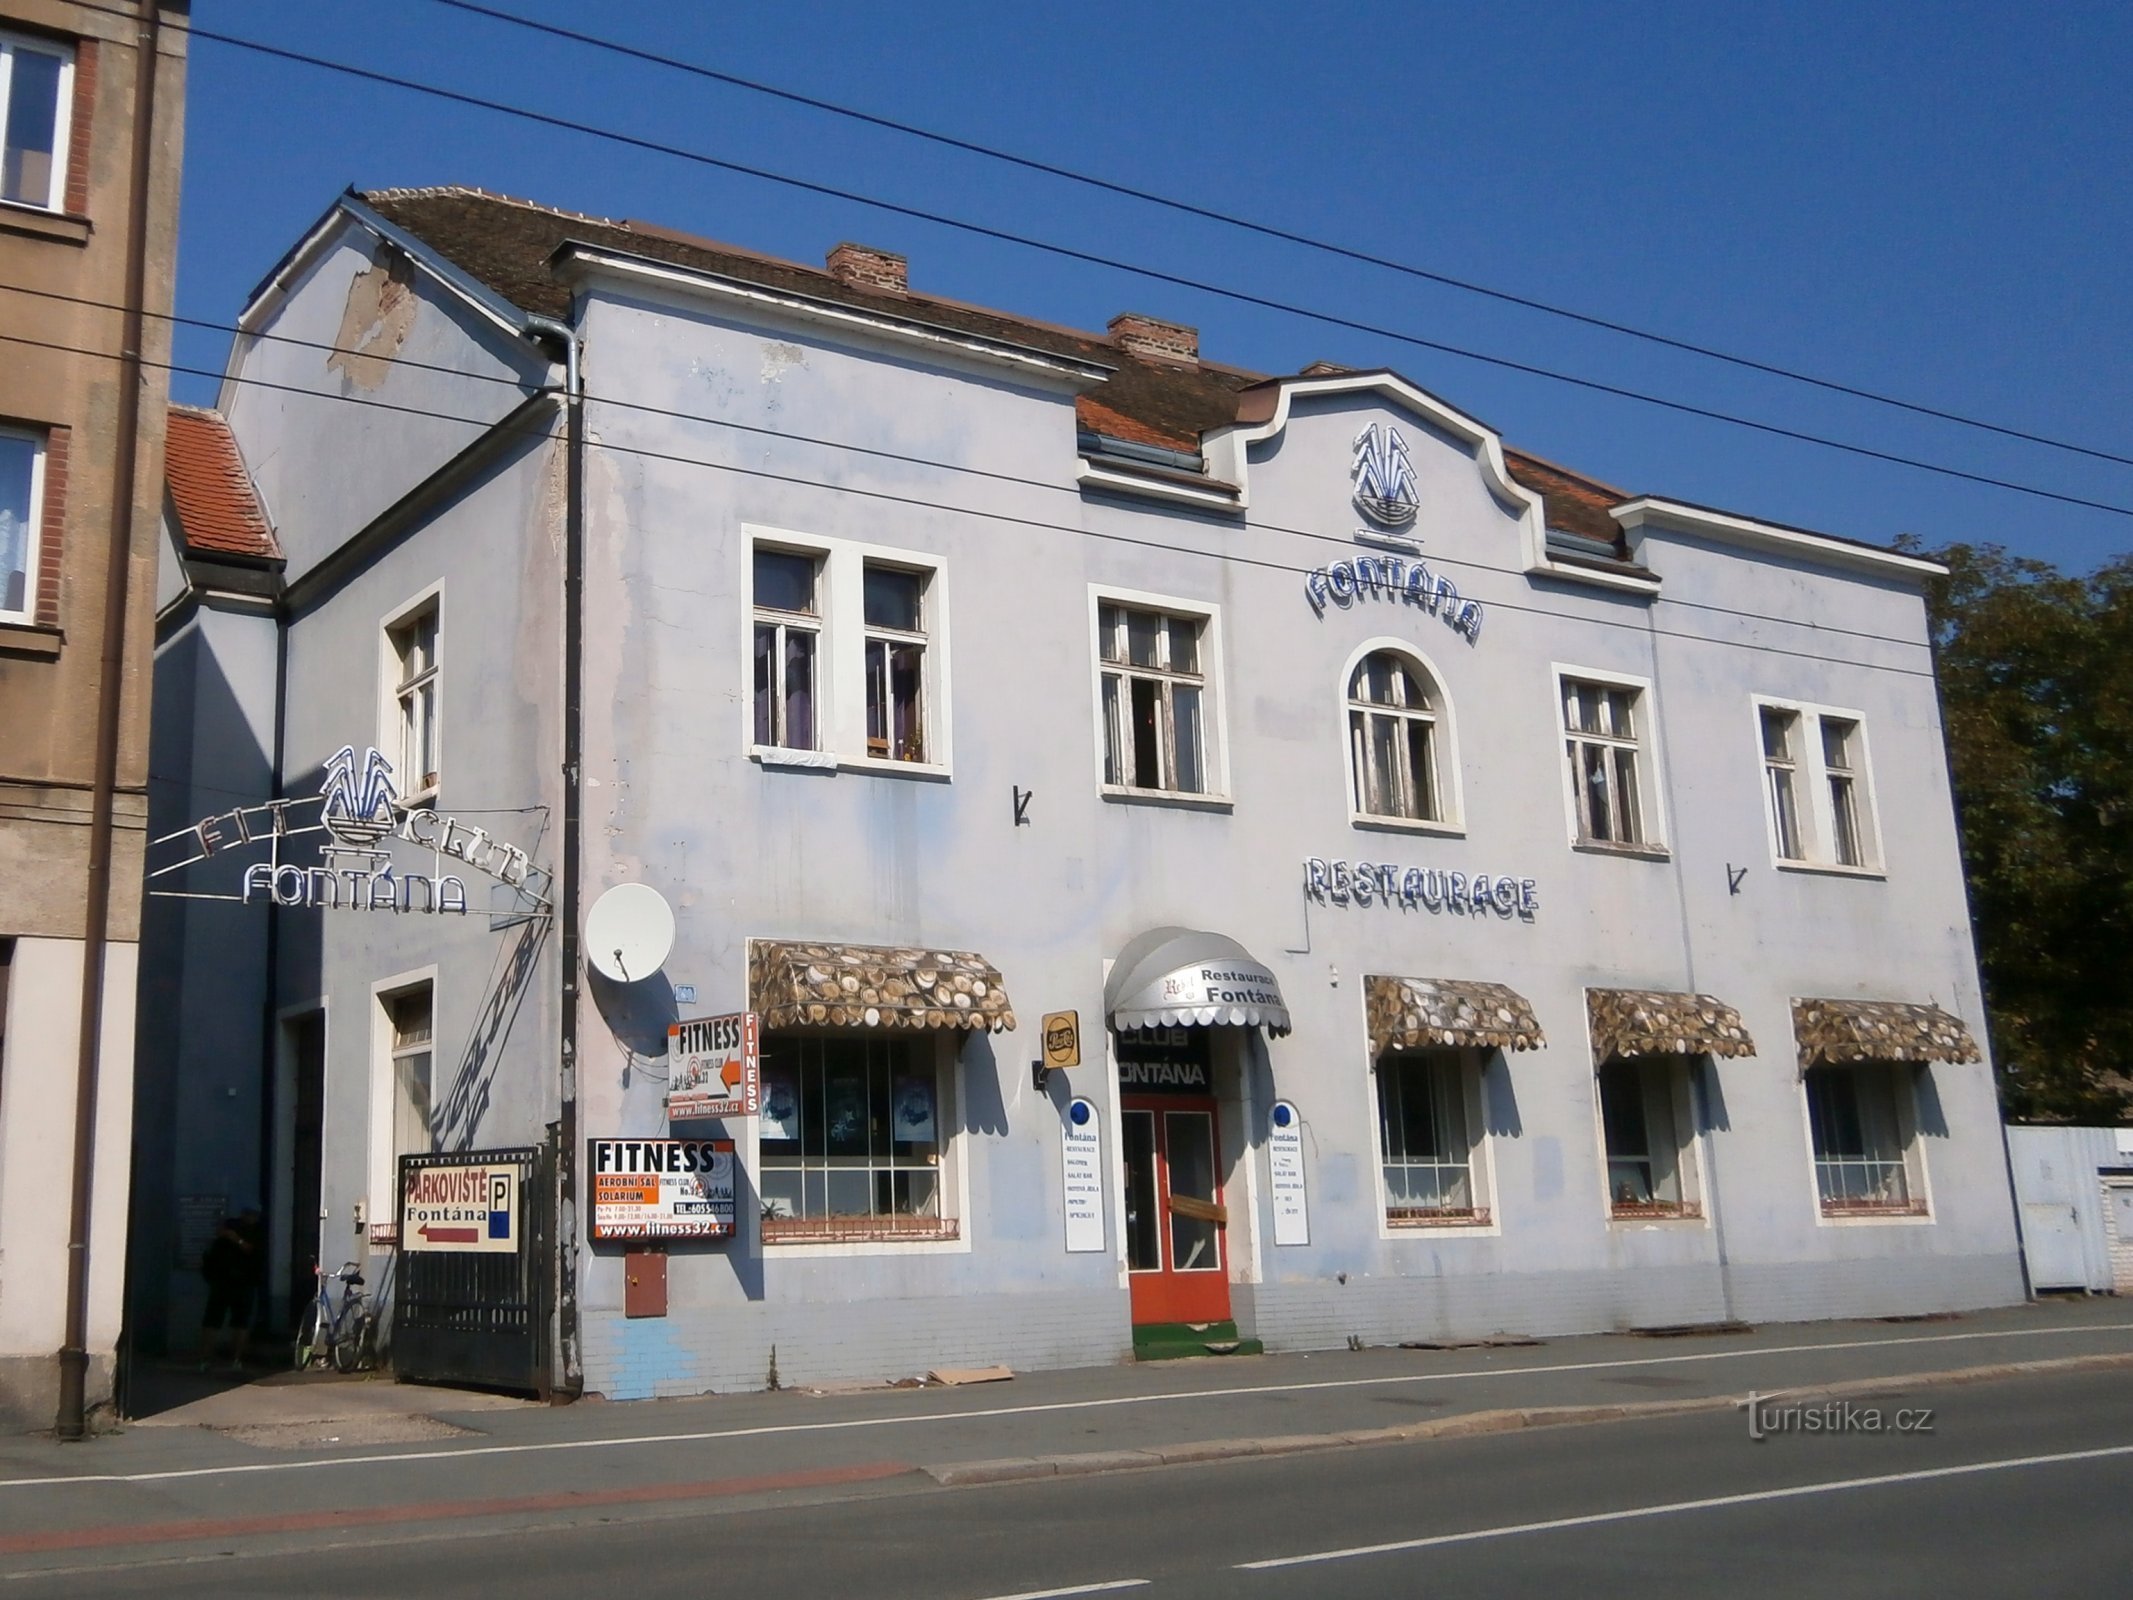 Nhà hàng Fontána (Hradec Králové, 17.9.2014/XNUMX/XNUMX)